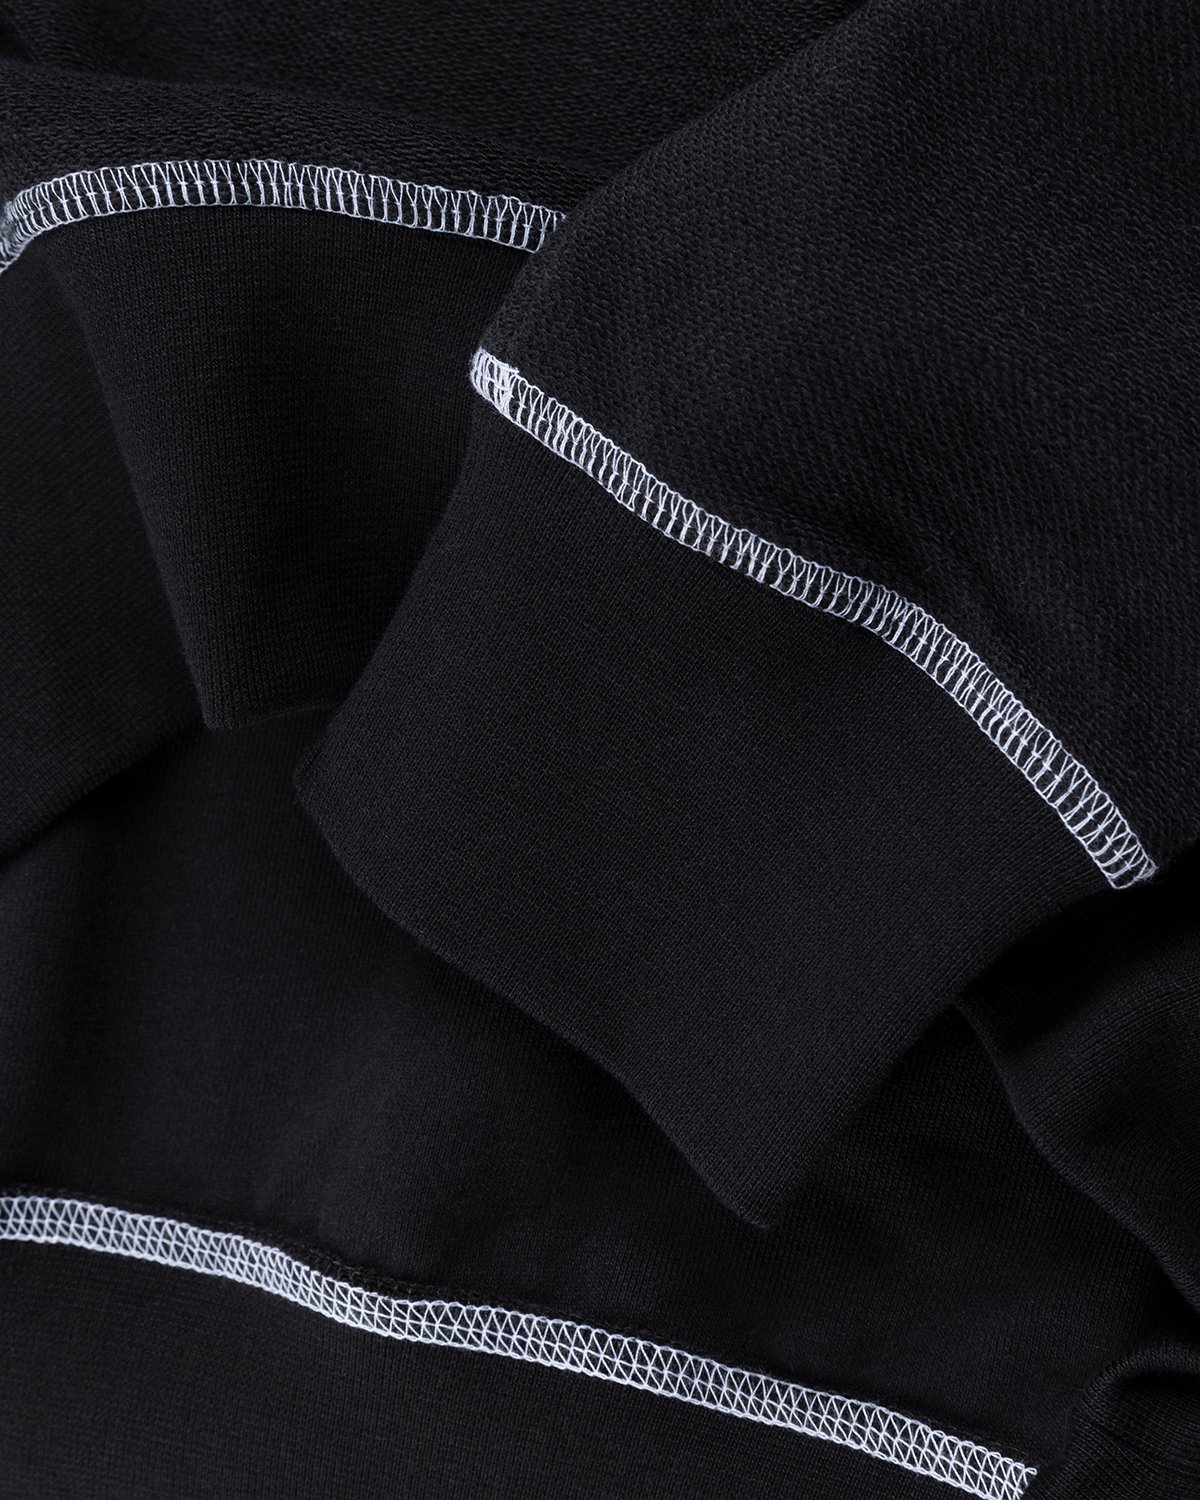 J.W. Anderson - Inside Out Contrast Sweatshirt Black - Clothing - Black - Image 5